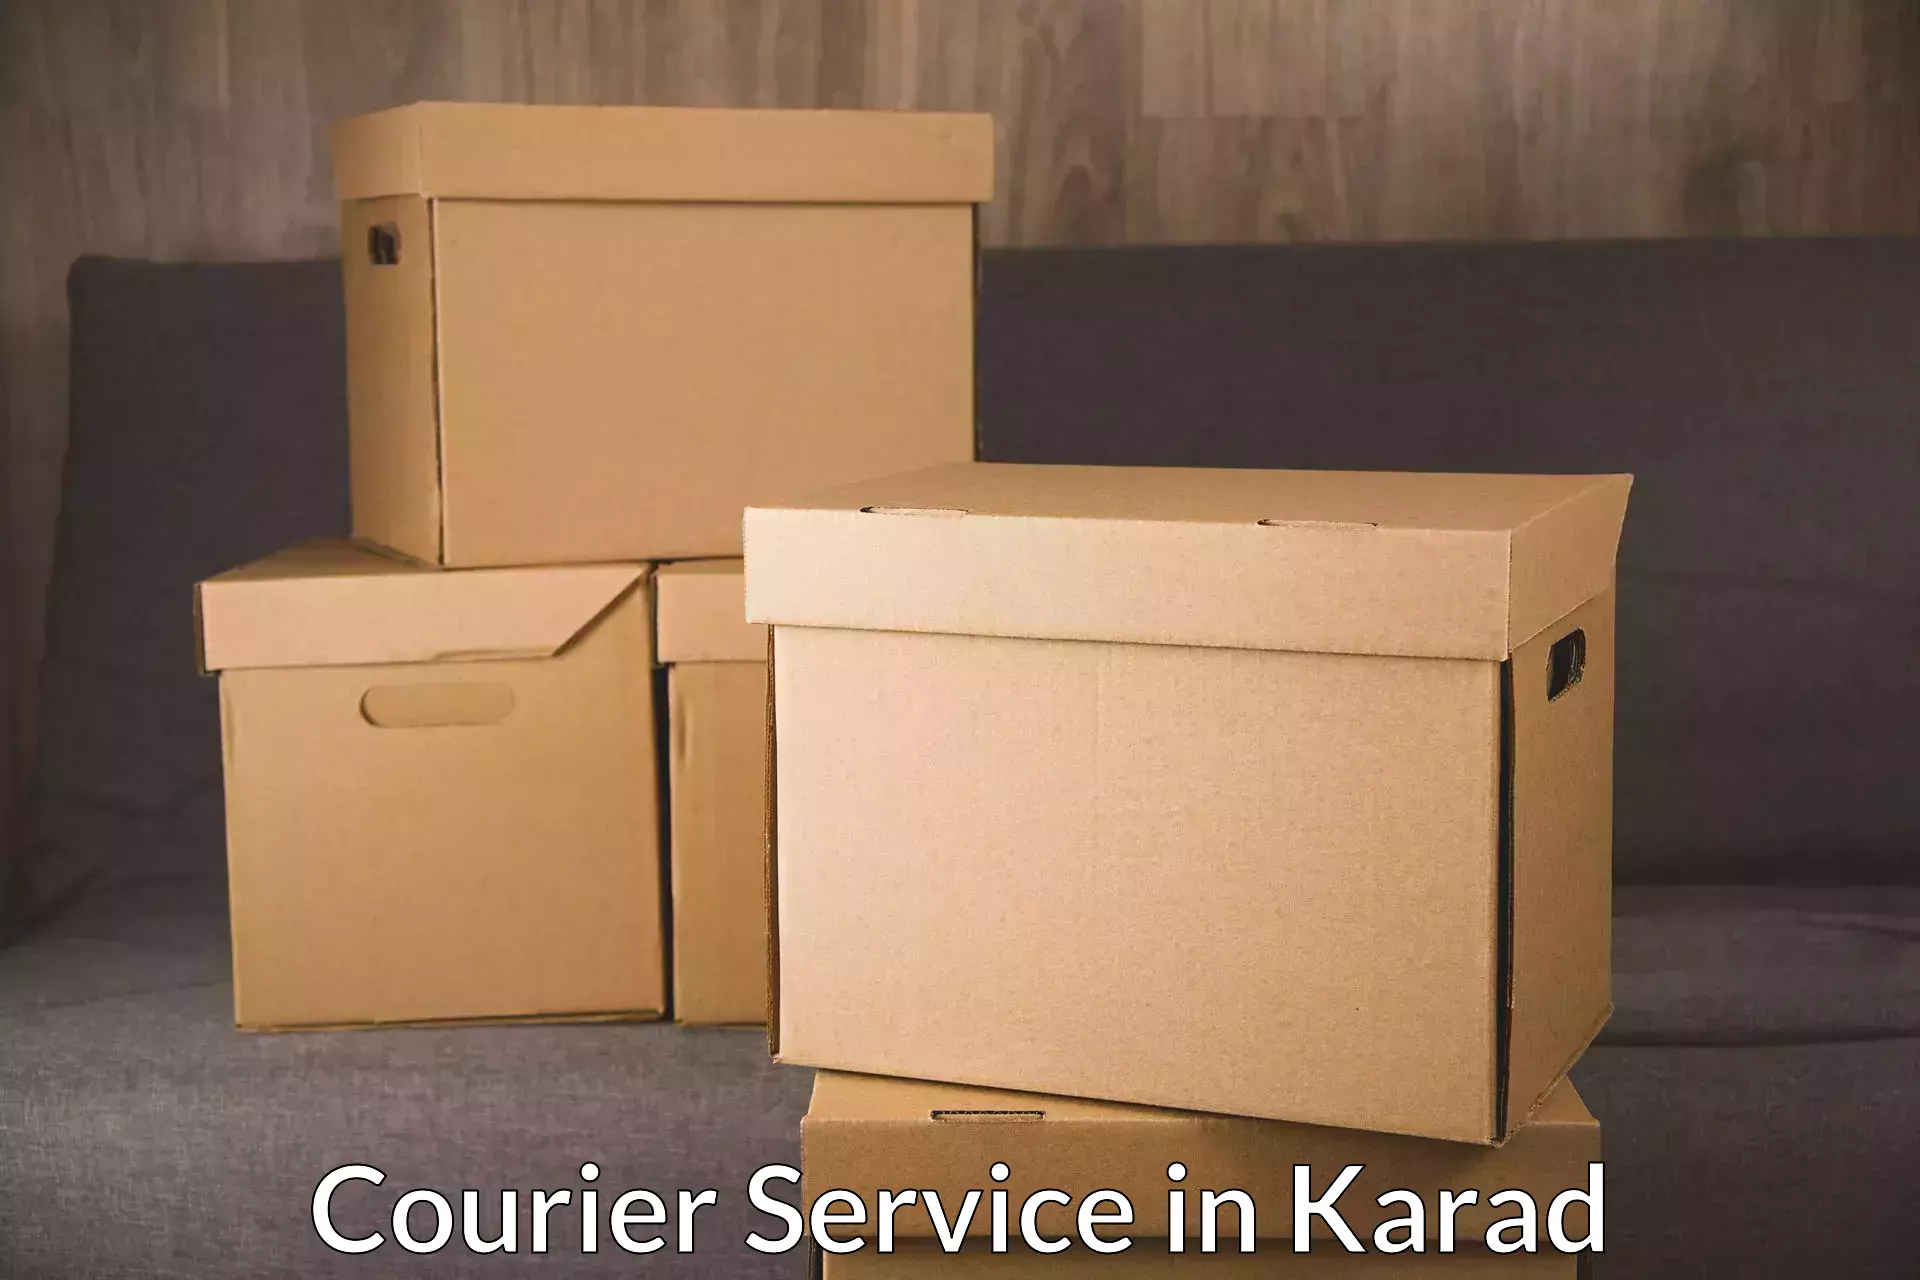 Advanced shipping technology in Karad